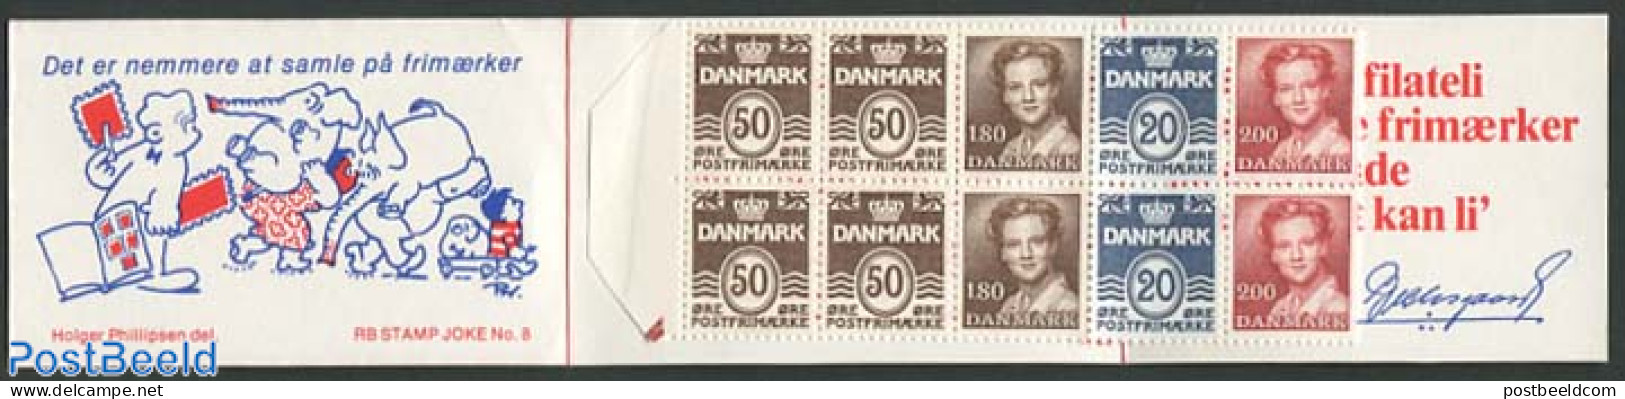 Denmark 1982 Definitives Booklet (H23 On Cover), Mint NH, Stamp Booklets - Ongebruikt